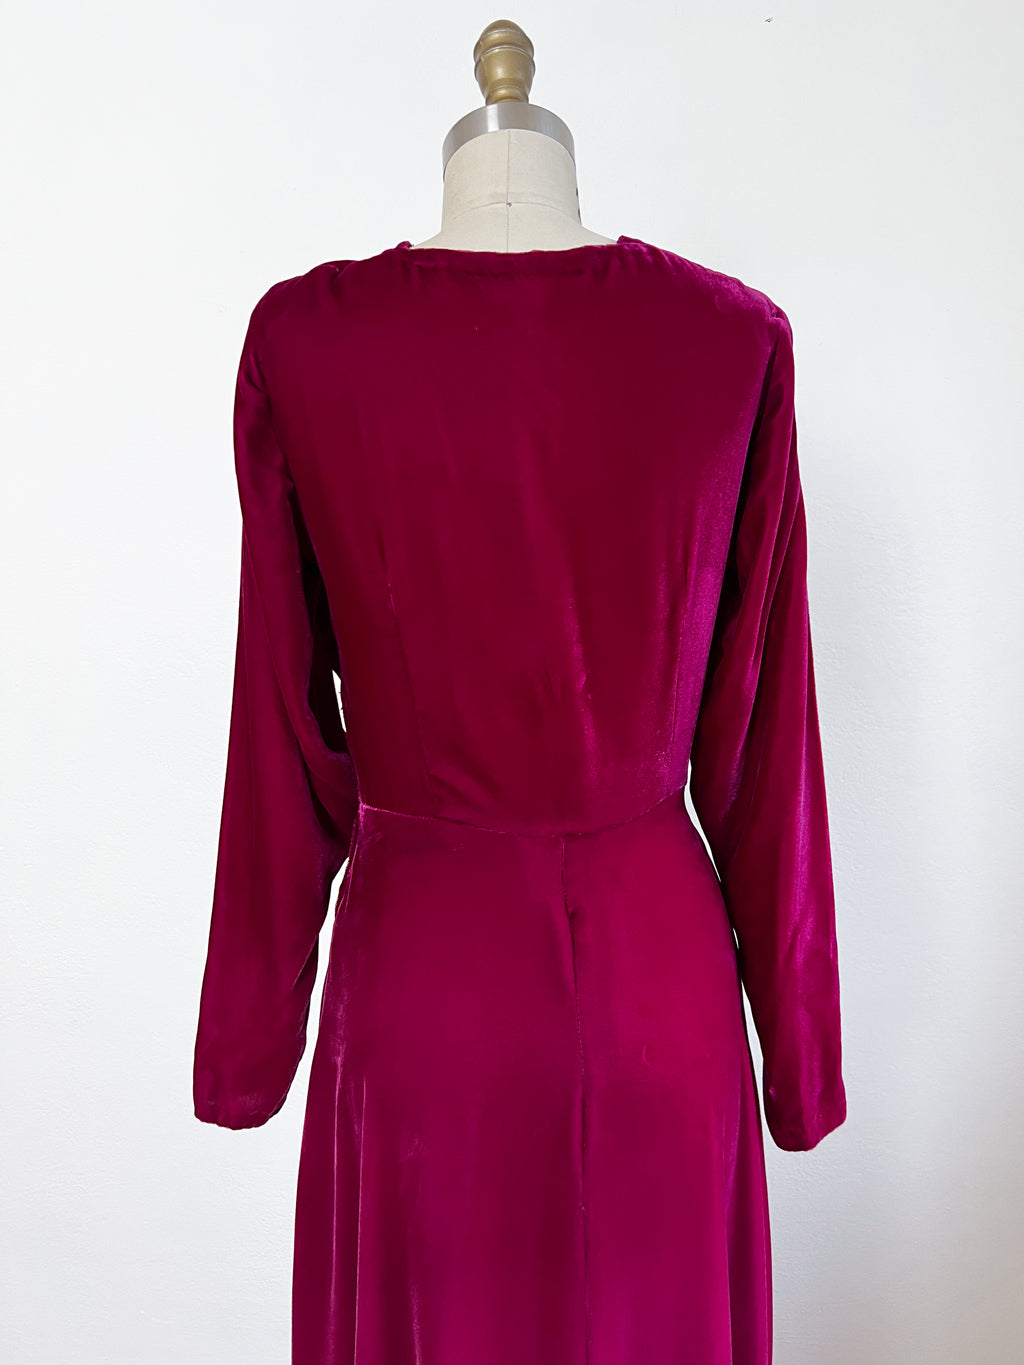 Vintage 1930s Full-Length Evening Gown - Vibrant Raspberry-Fuchsia Velvet Bias-Cut Dress Size XS - S